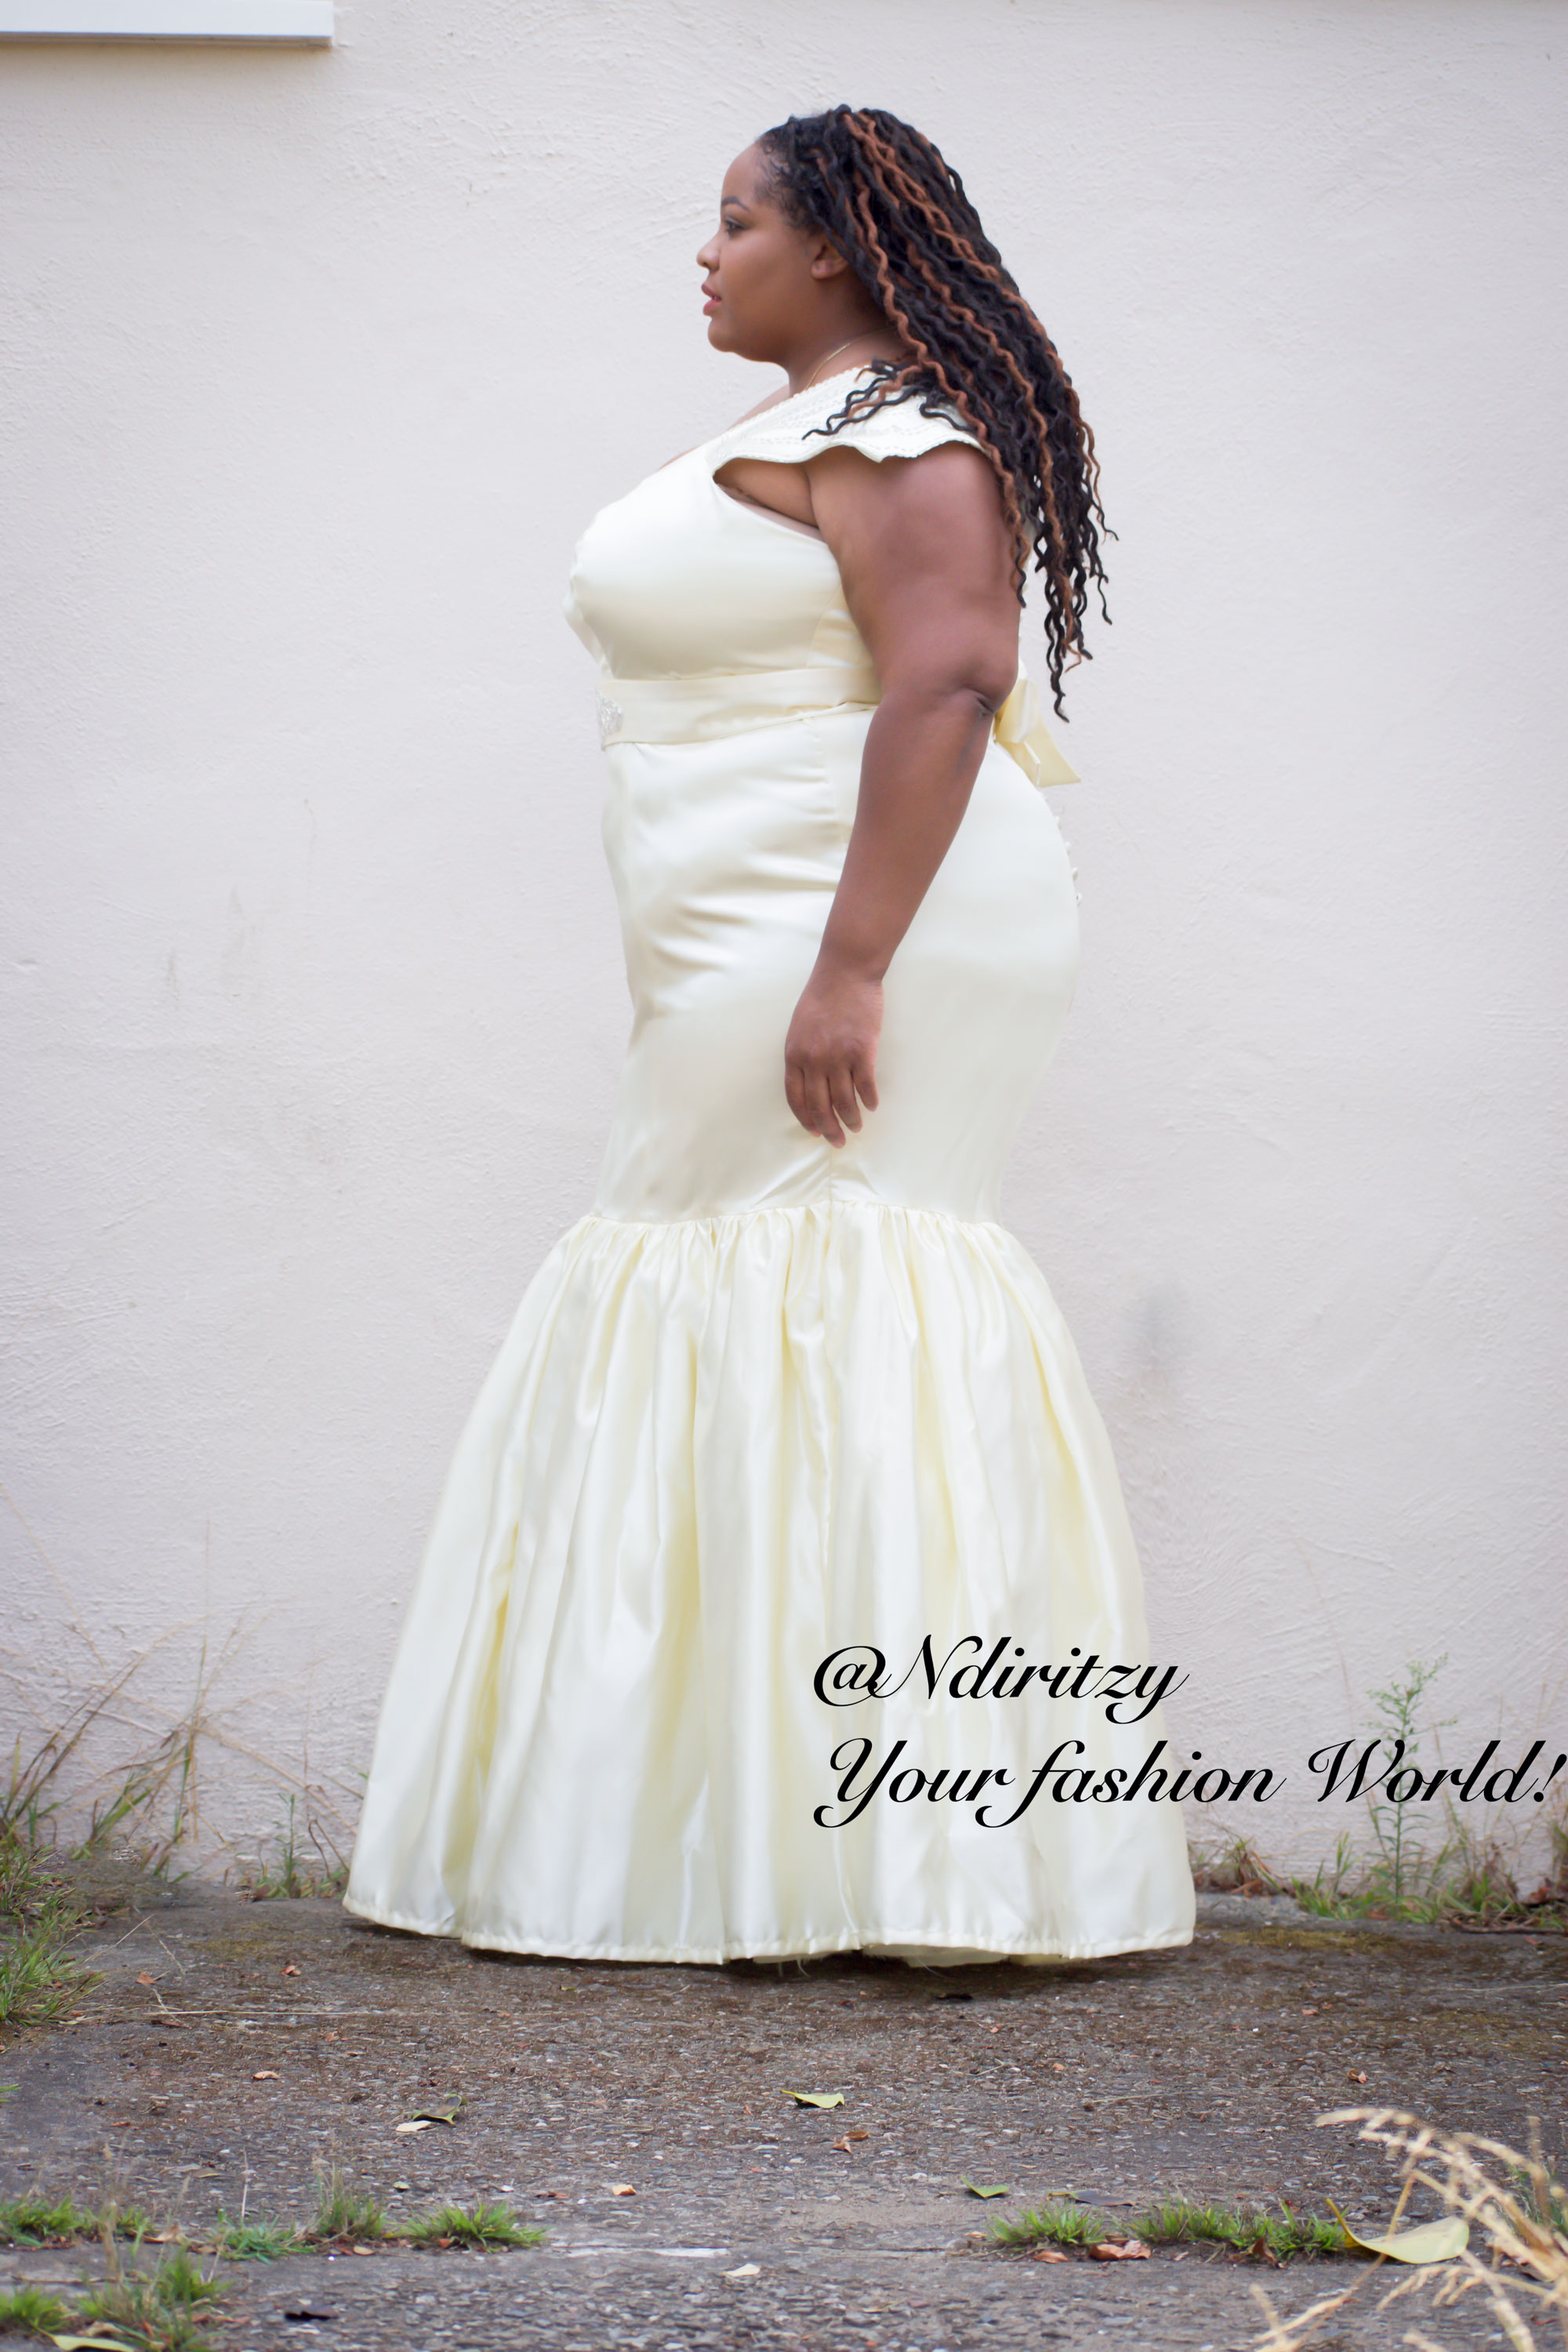 off white side view plus size wedding dress